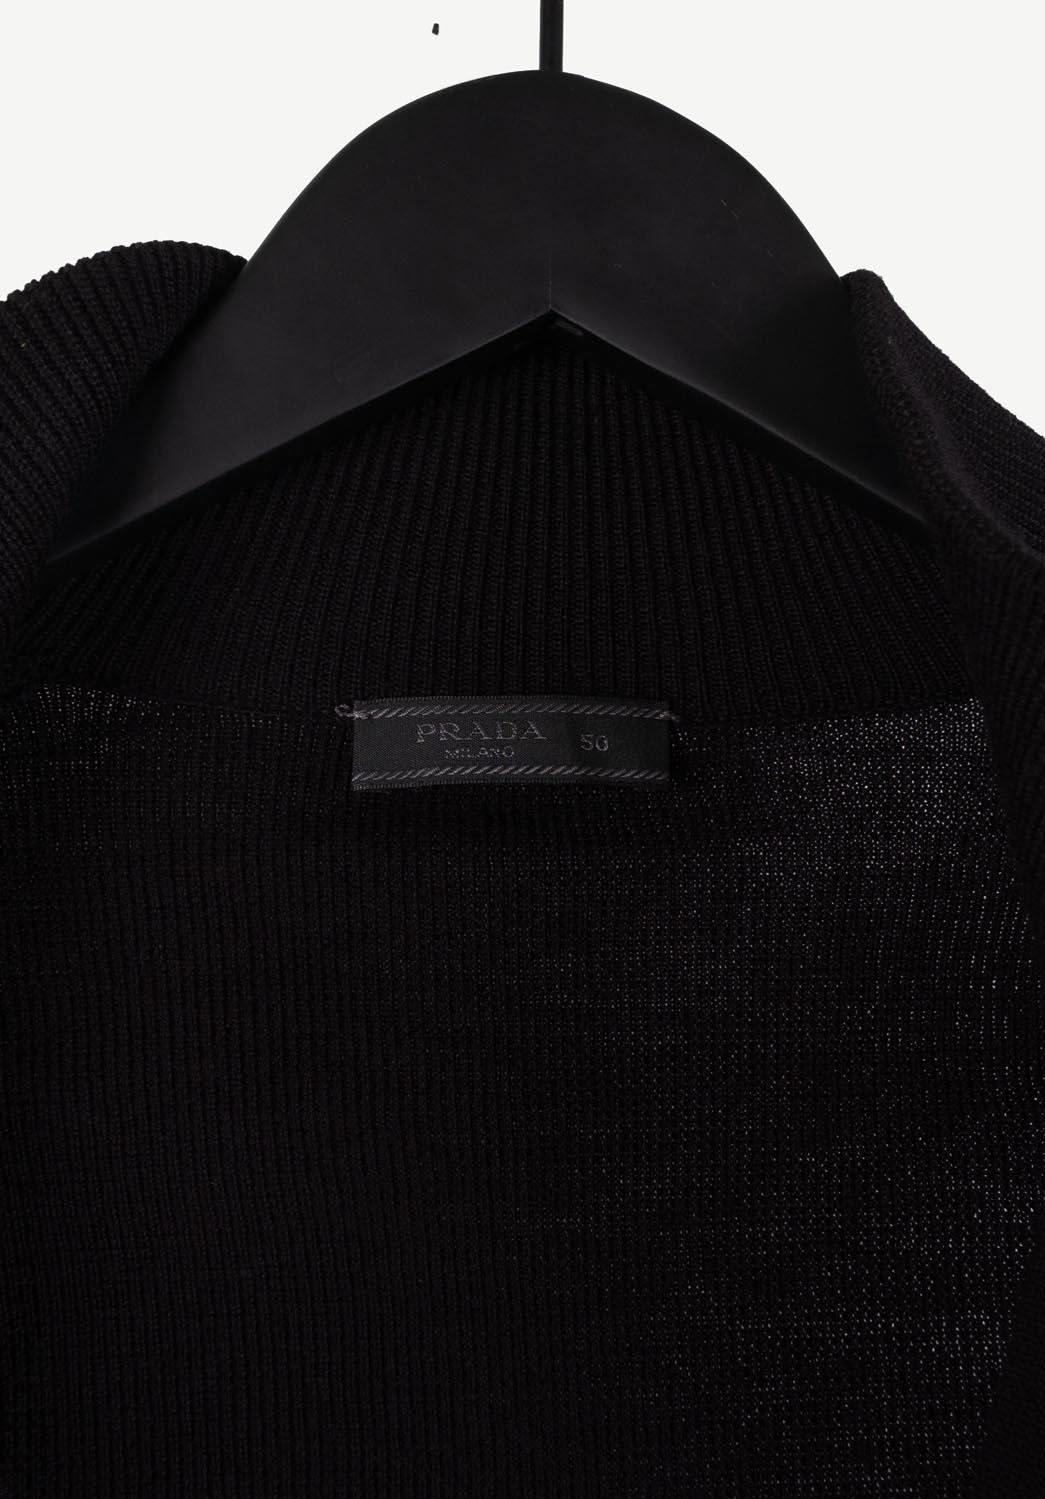 Prada Men Sweater Jacket Wool Nylon Zipped Size 50IT(Medium), S303 For Sale 1